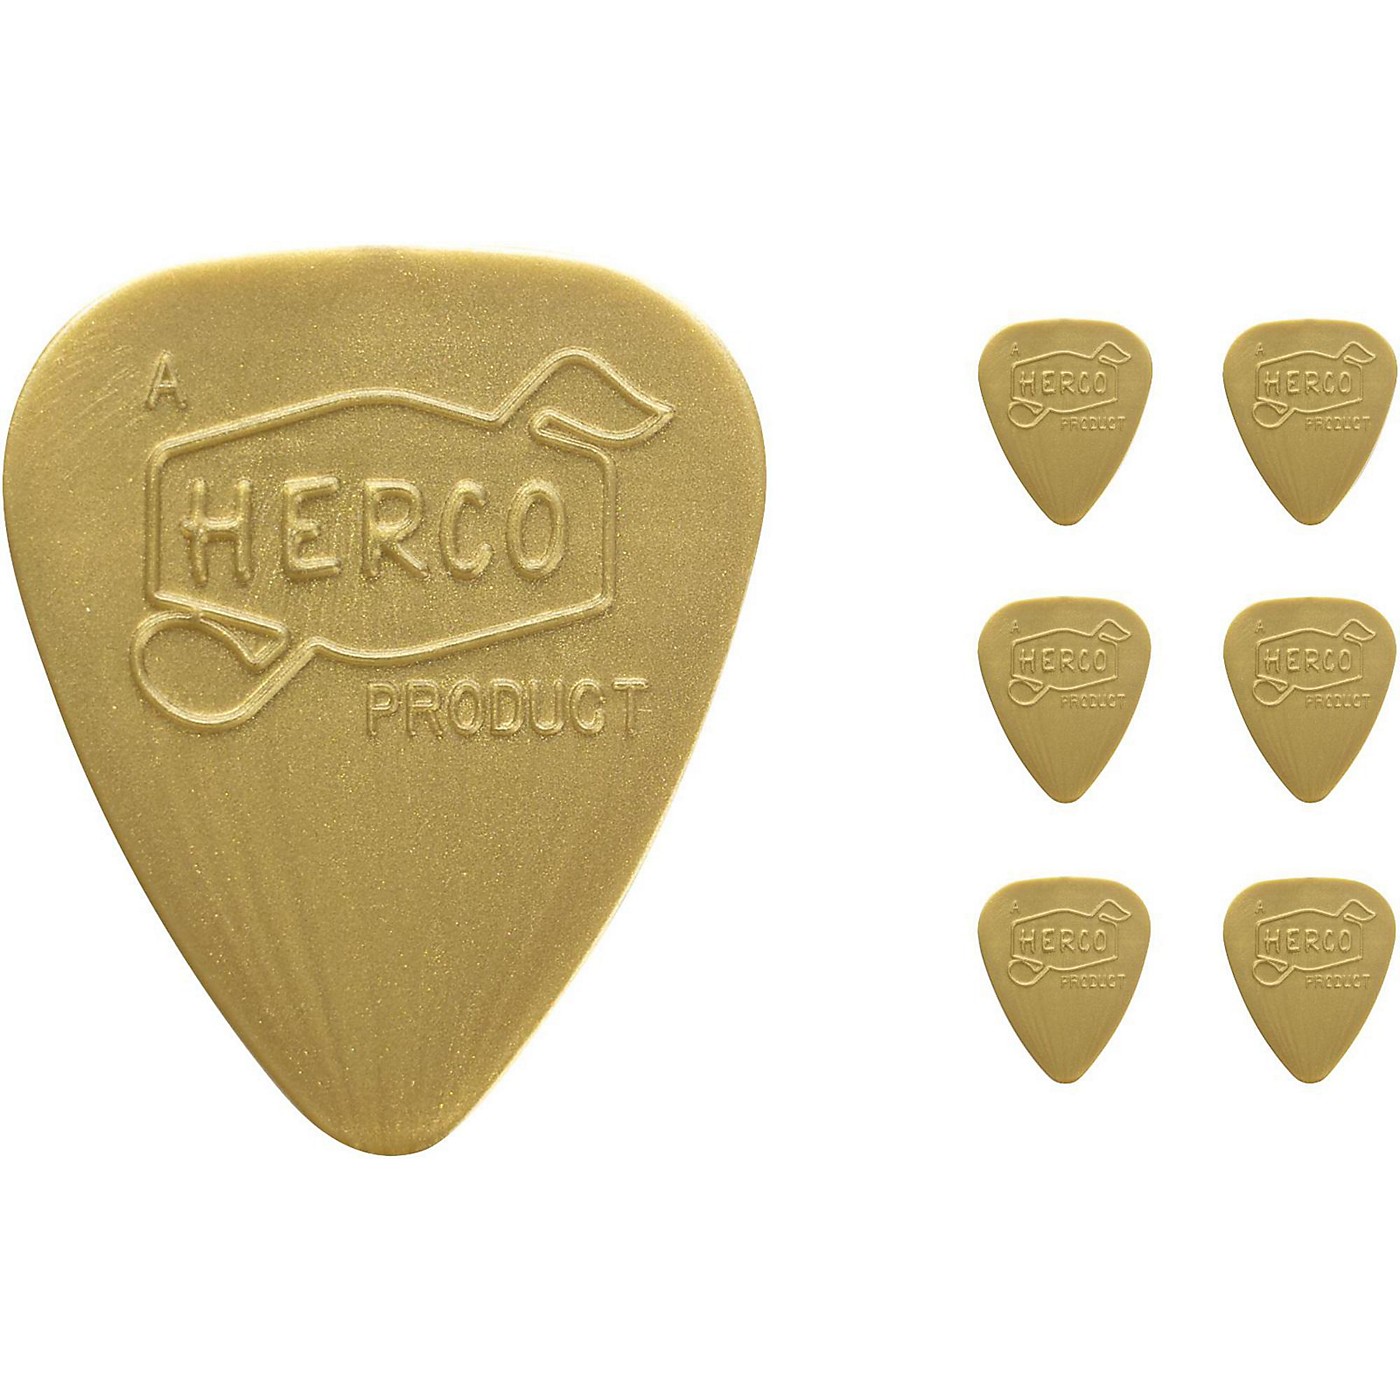 Dunlop Herco Vintage 66' Light Picks Gold (6-Pack) thumbnail